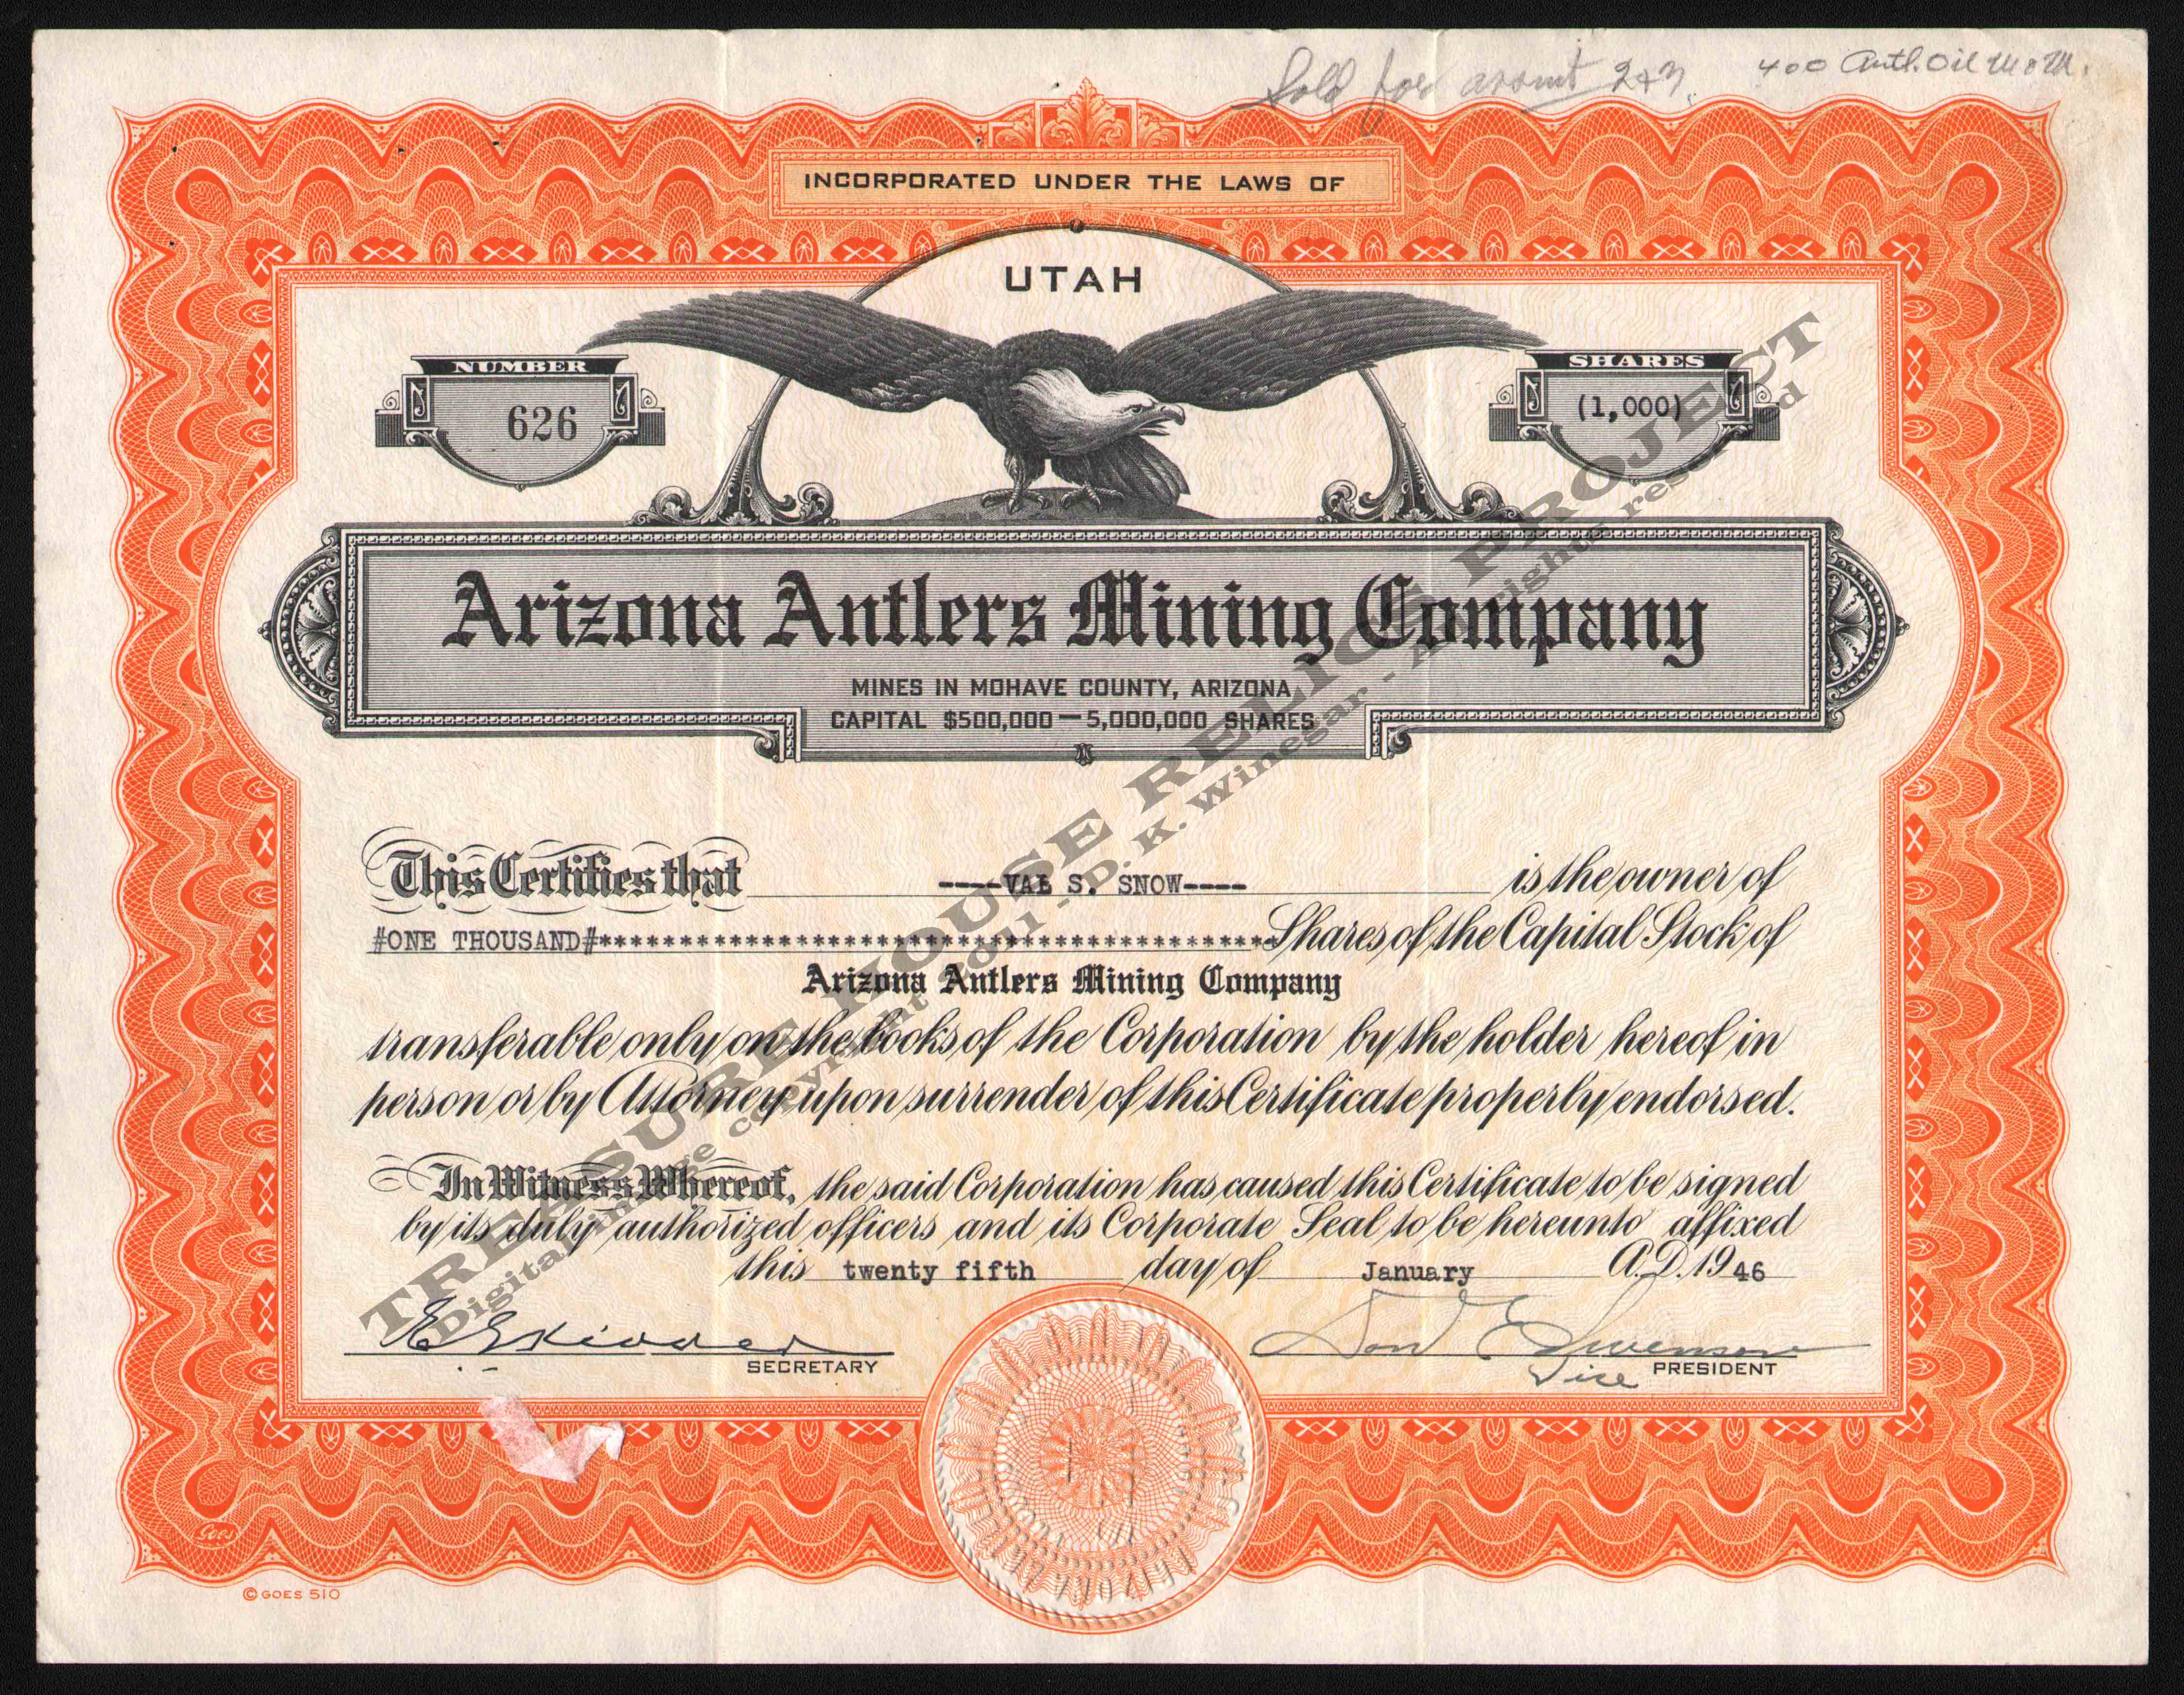 ARIZONA_ANTLERS_MINING_COMPANY_626_1946_400_EMBOSS.jpg